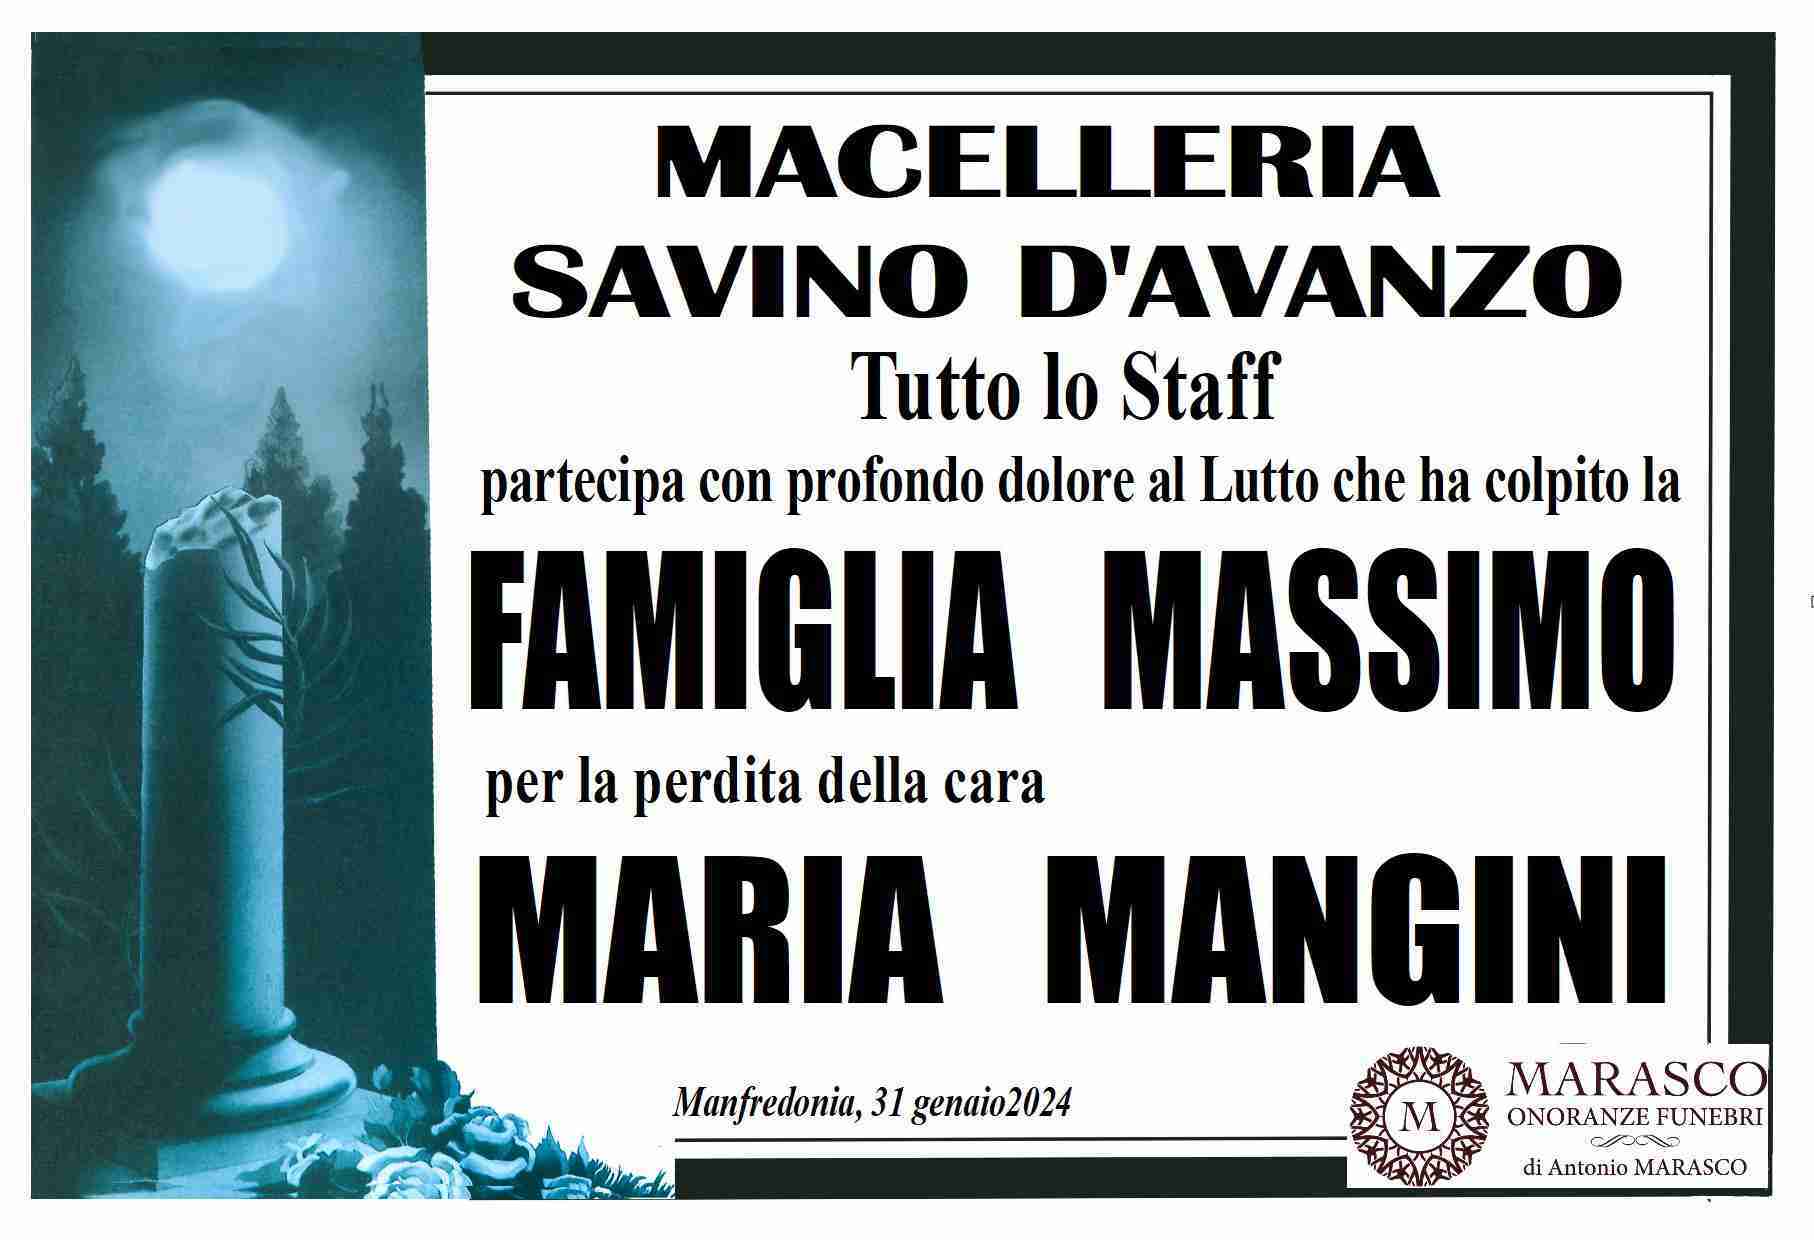 Maria Mangini ved. Massimo